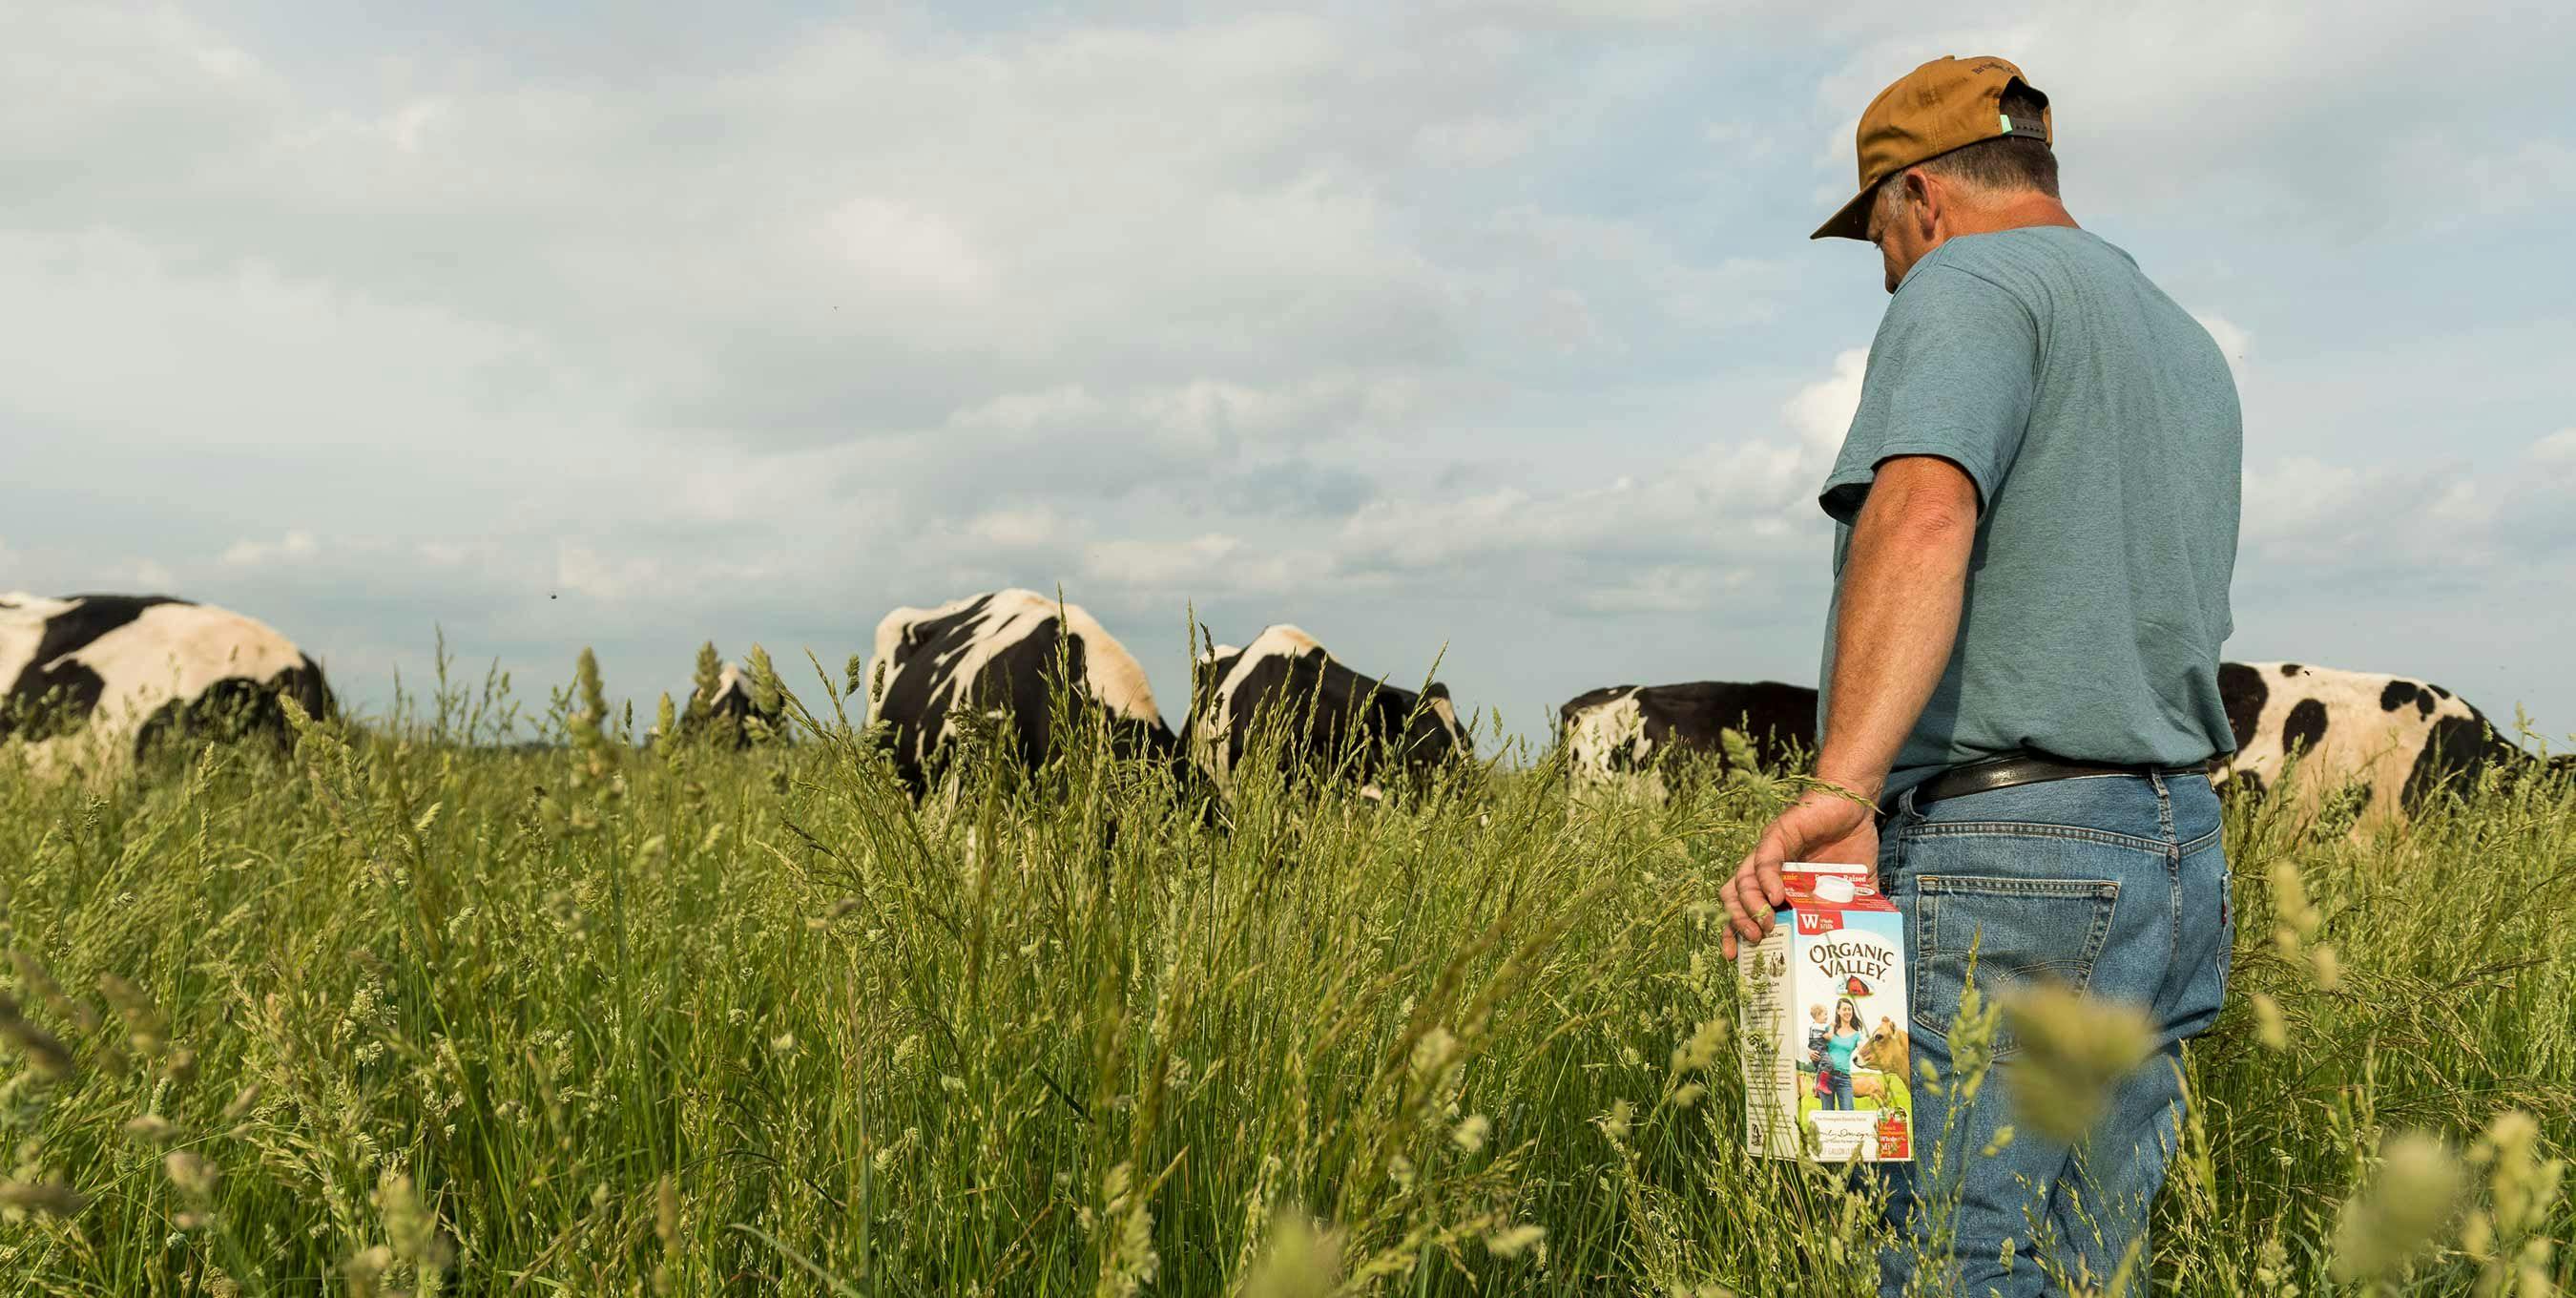 An Organic Valley farmer walking with a half gallon of Organic Valley milk